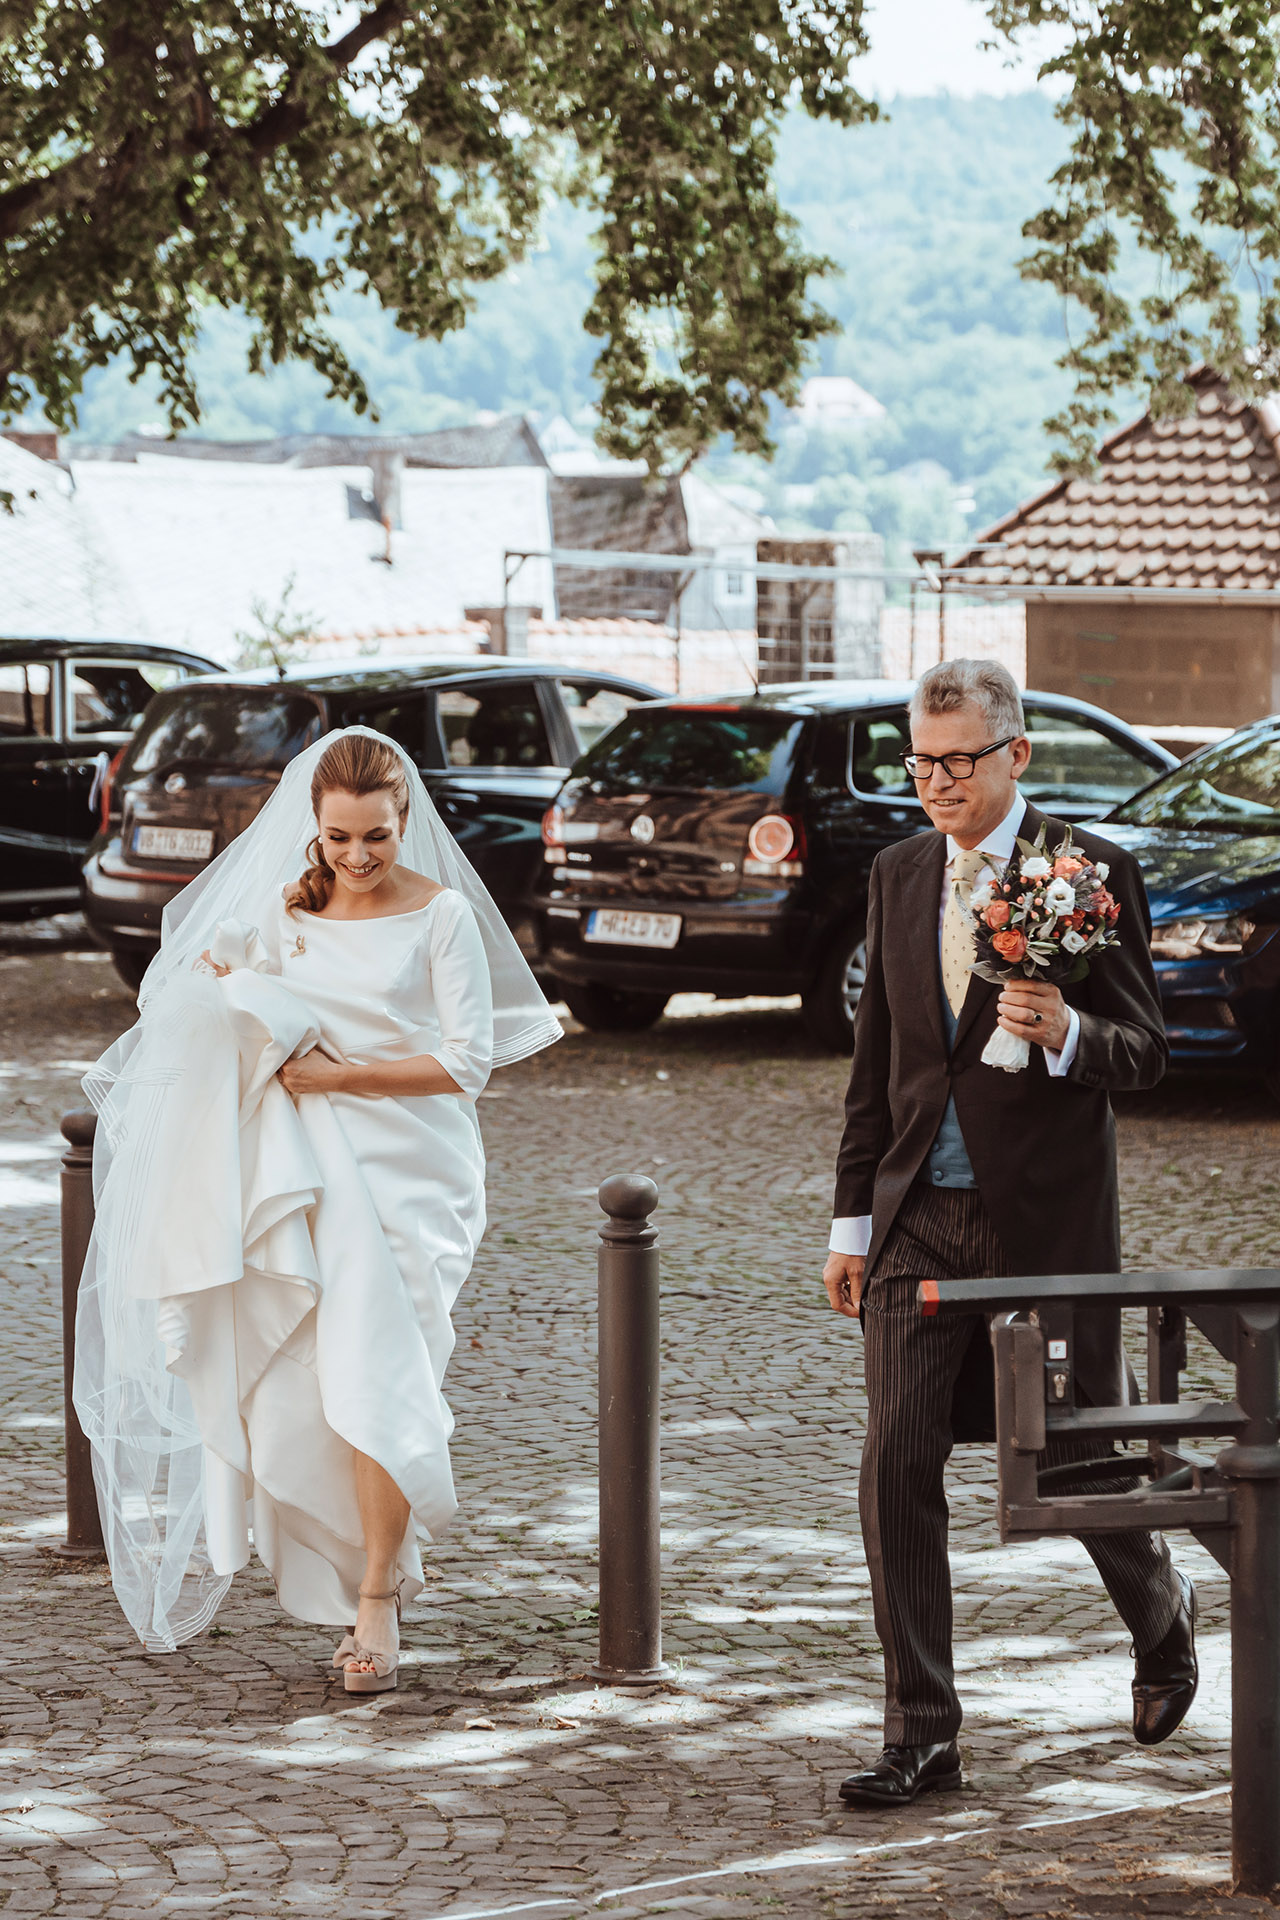 dagobertshausen wedding